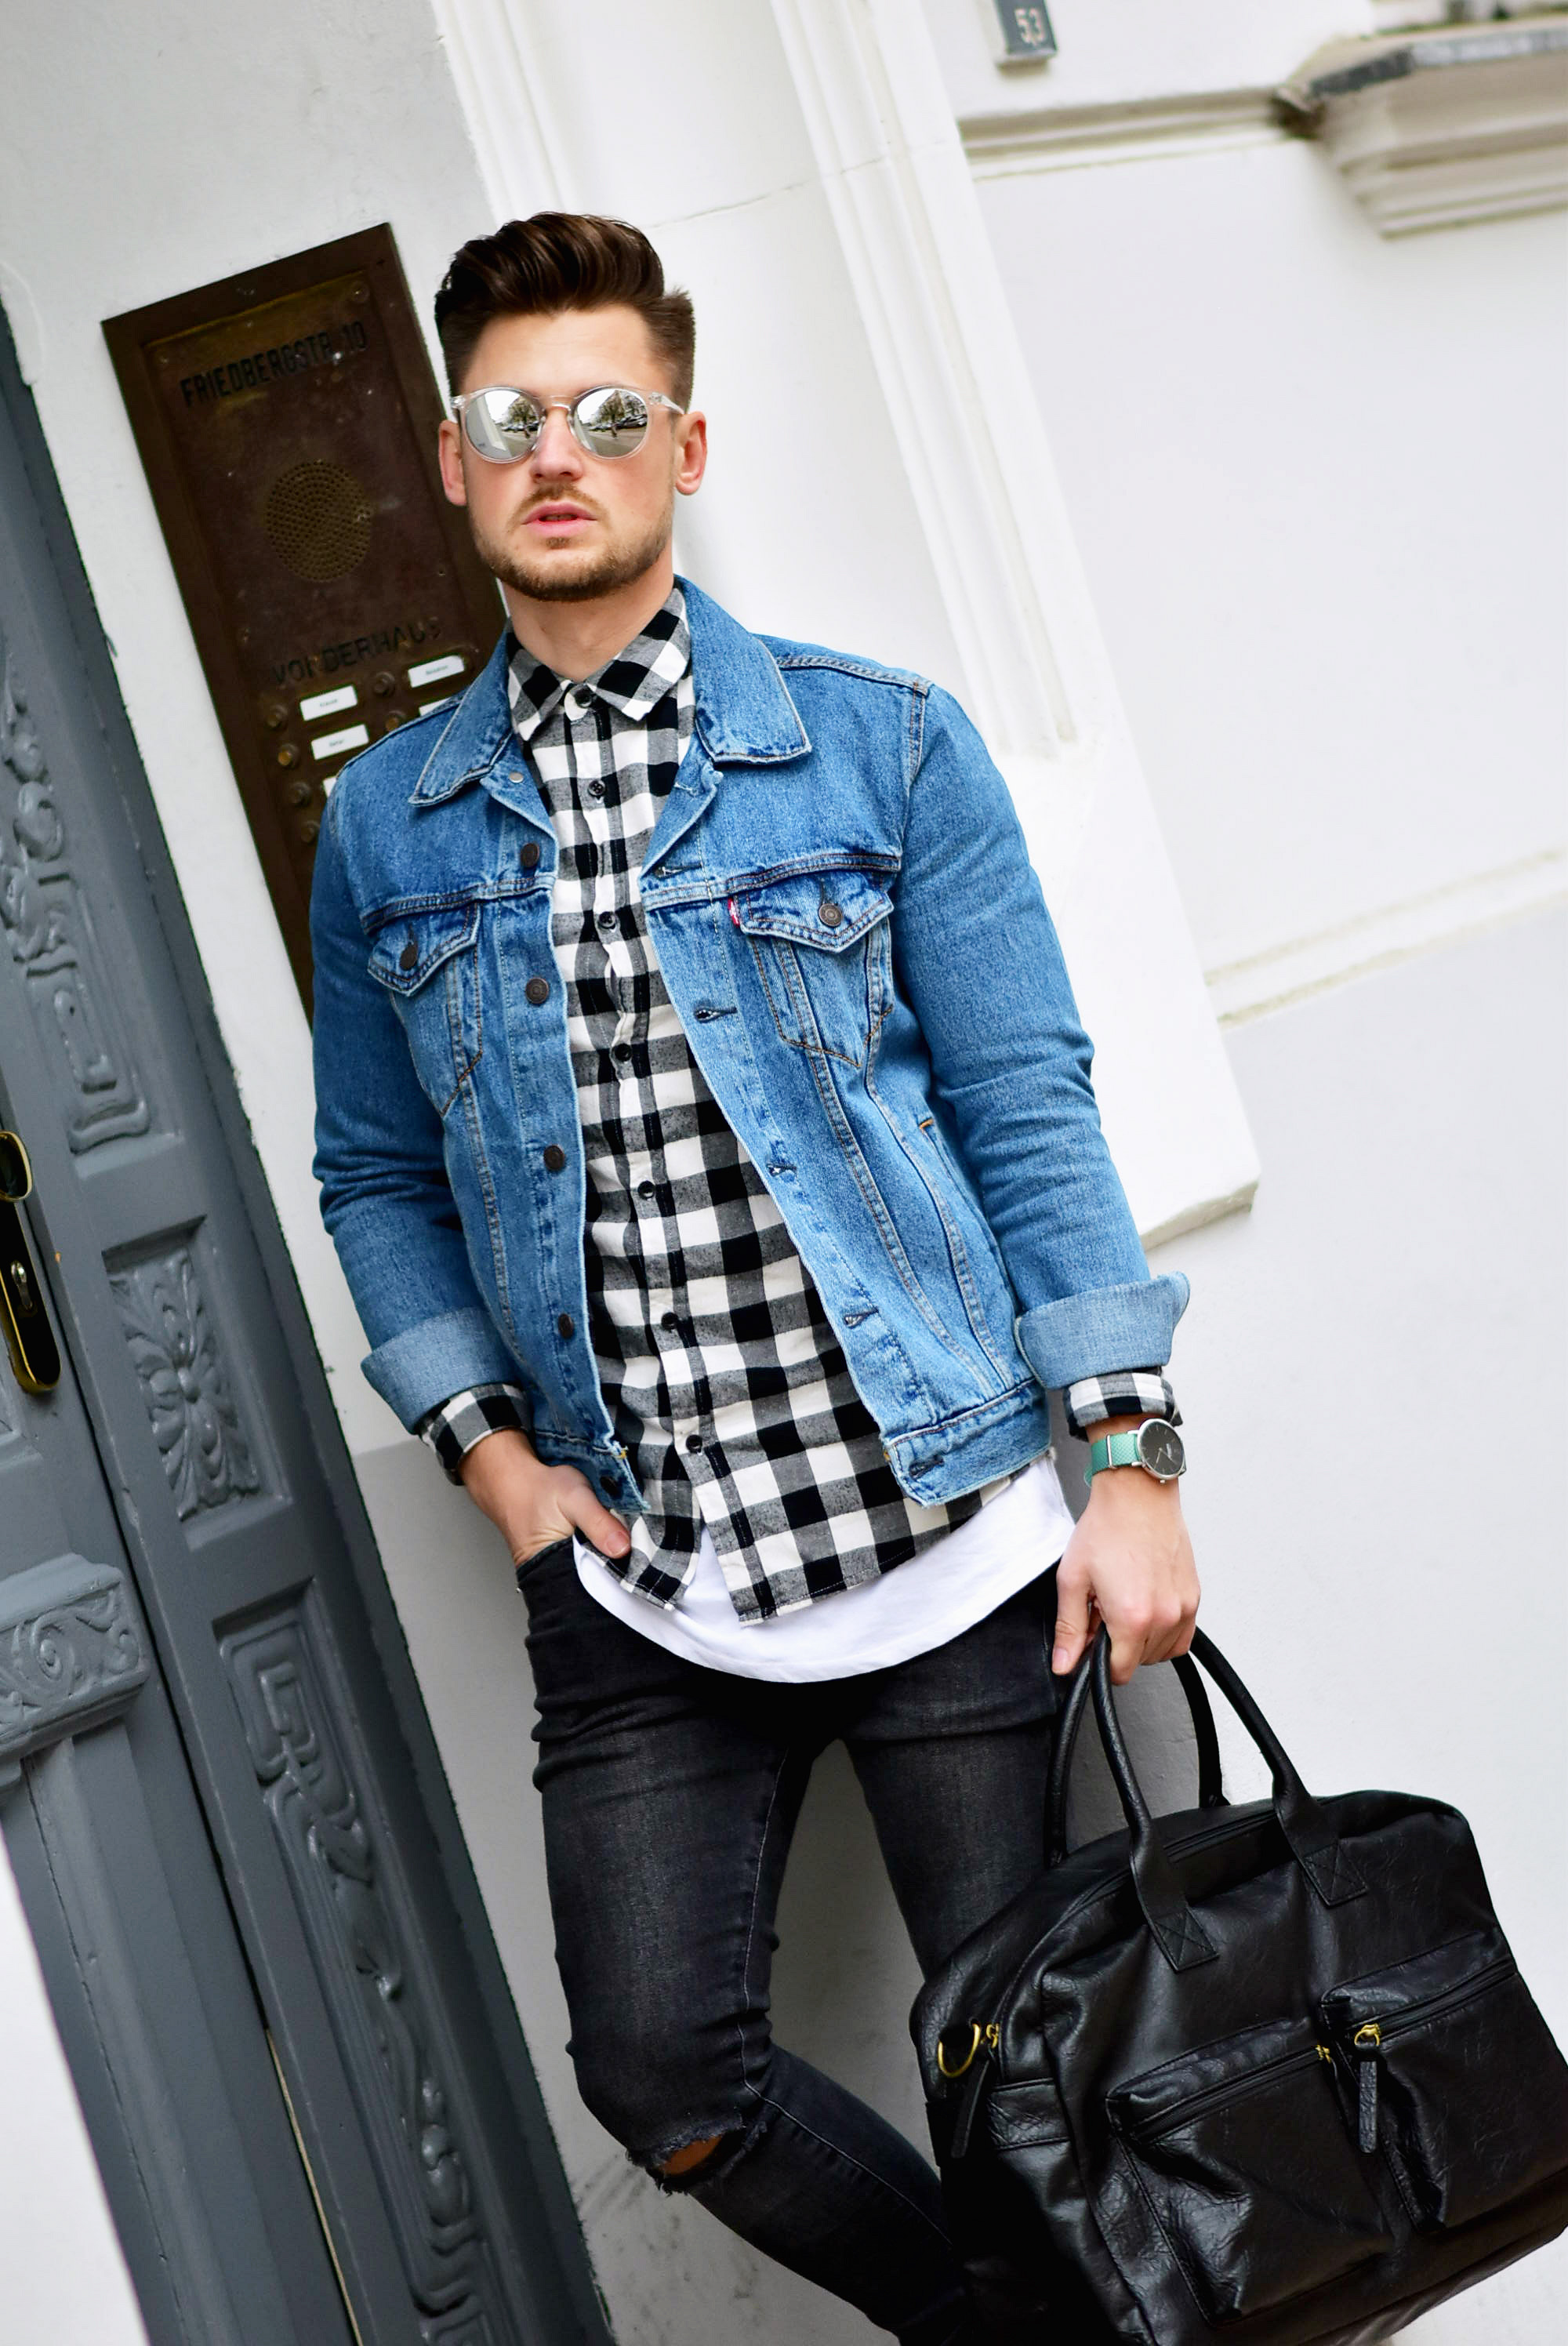 Tommeezjerry-Styleblog-Männerblog-Modeblog-Berlin-Outfit-Jeanslook-Ripped-Jeans-Jeansjacke-Levis-Converse-Chucks-Travelbag